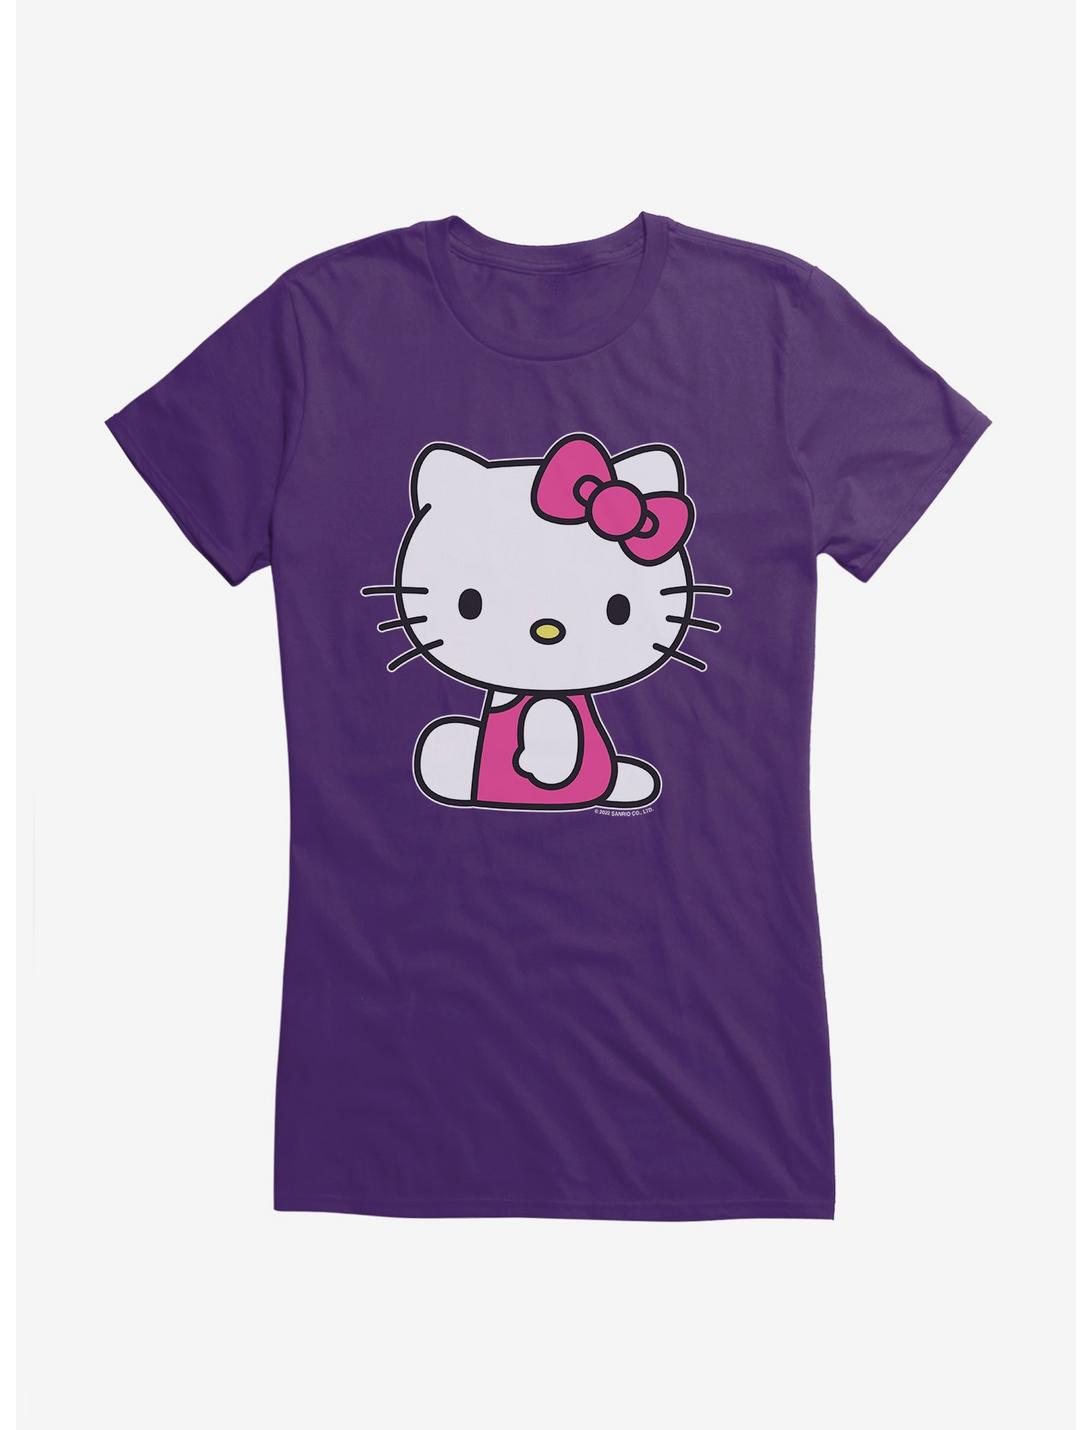 Hello Kitty Sugar Rush Side View Girls T-Shirt, PURPLE, hi-res